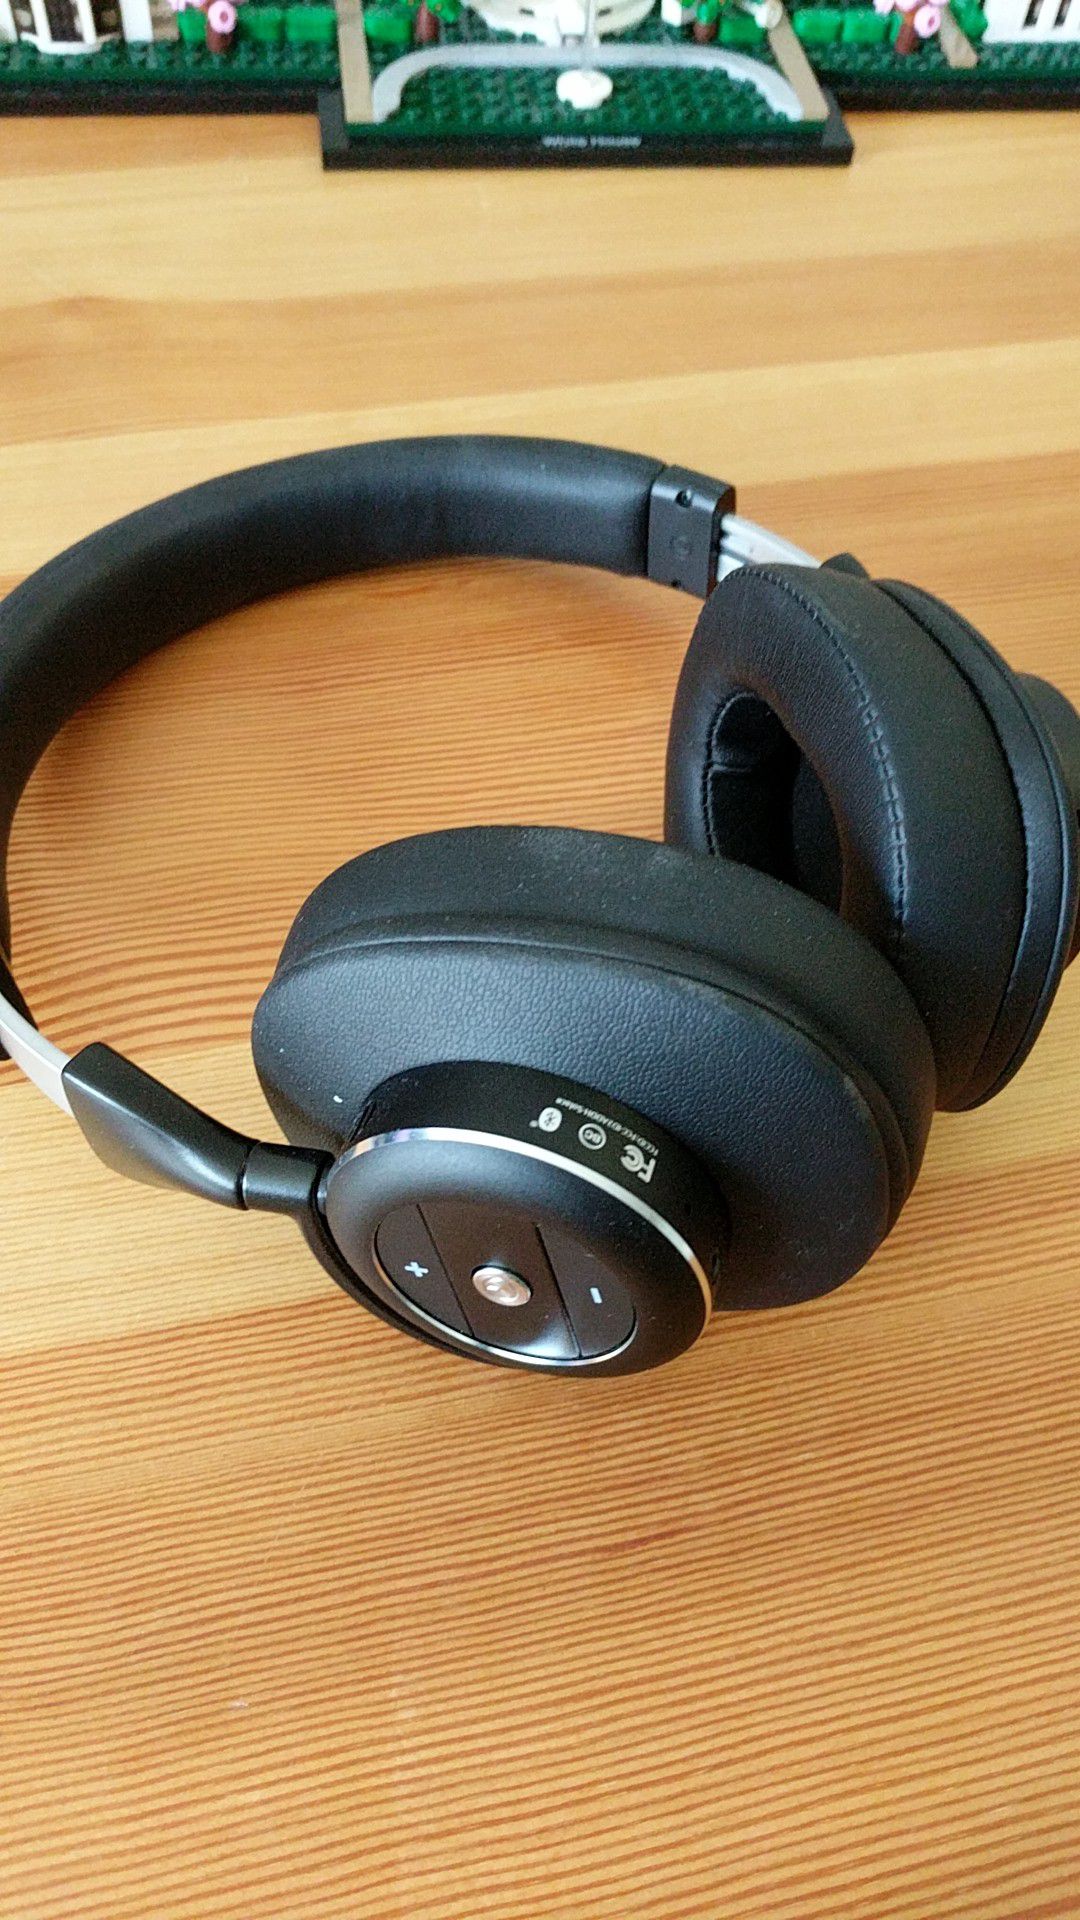 Monoprice bluetooth noise cancel headphone